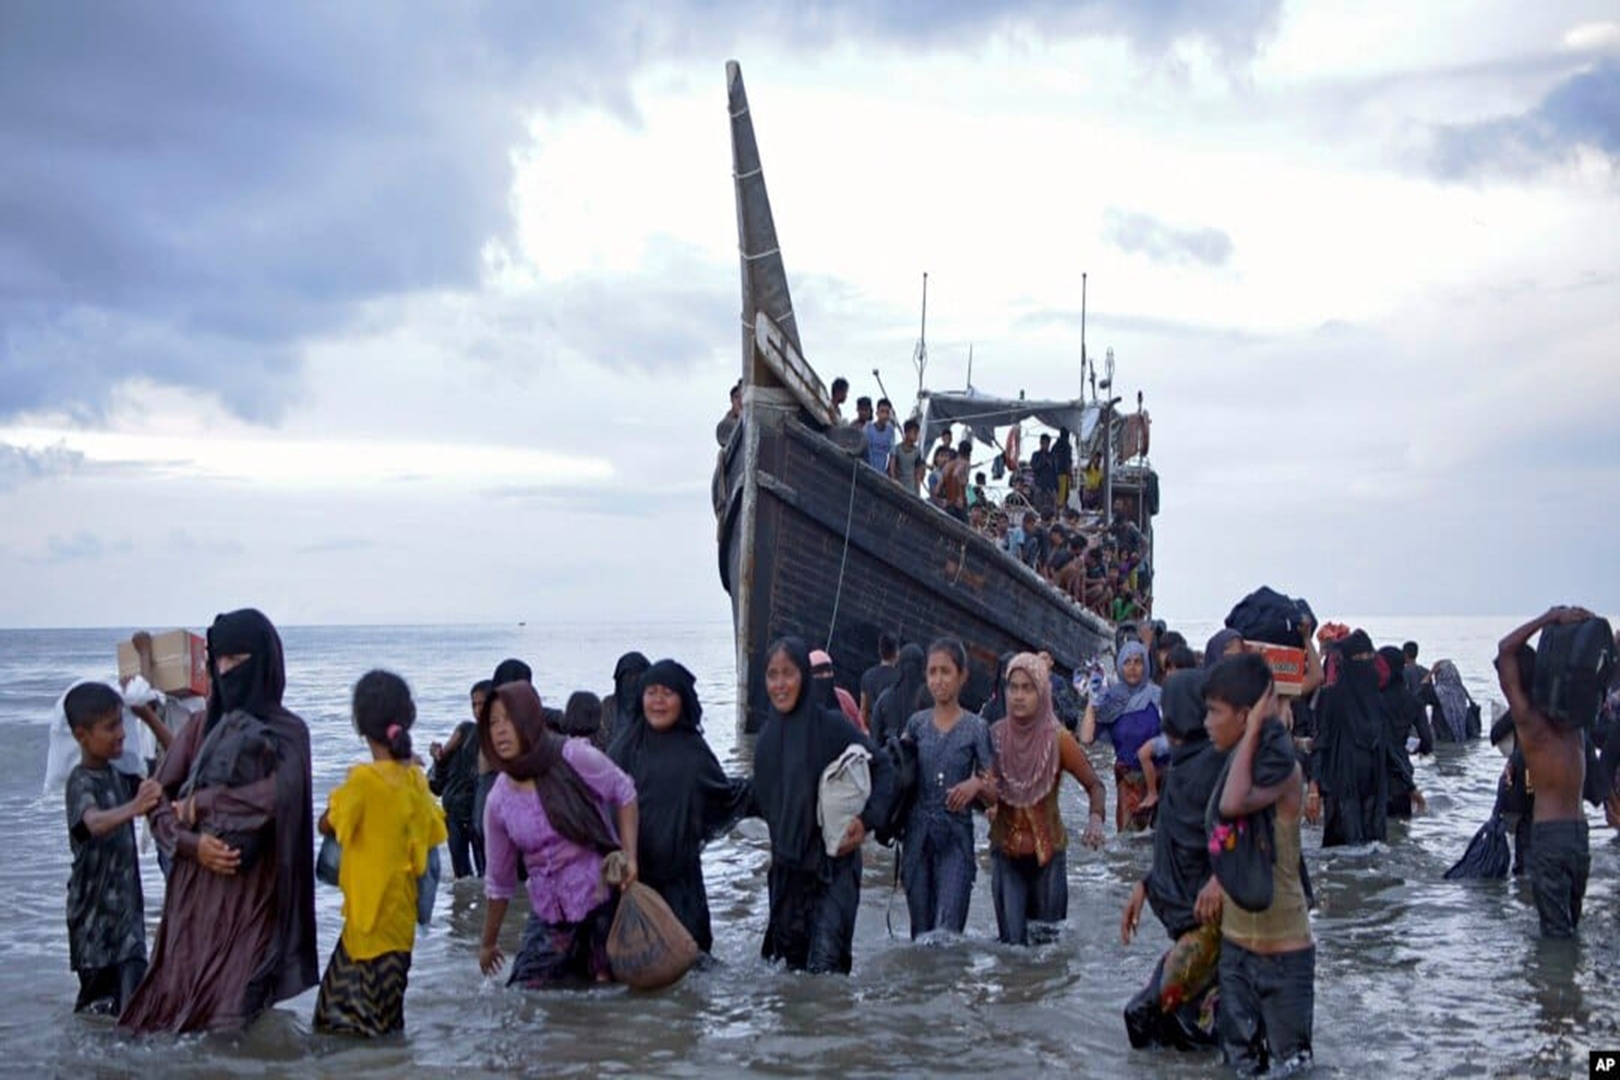 Polisi : Rohingya Datang ke Indonesia untuk Cari Kerja, Bukan Mengungsi 